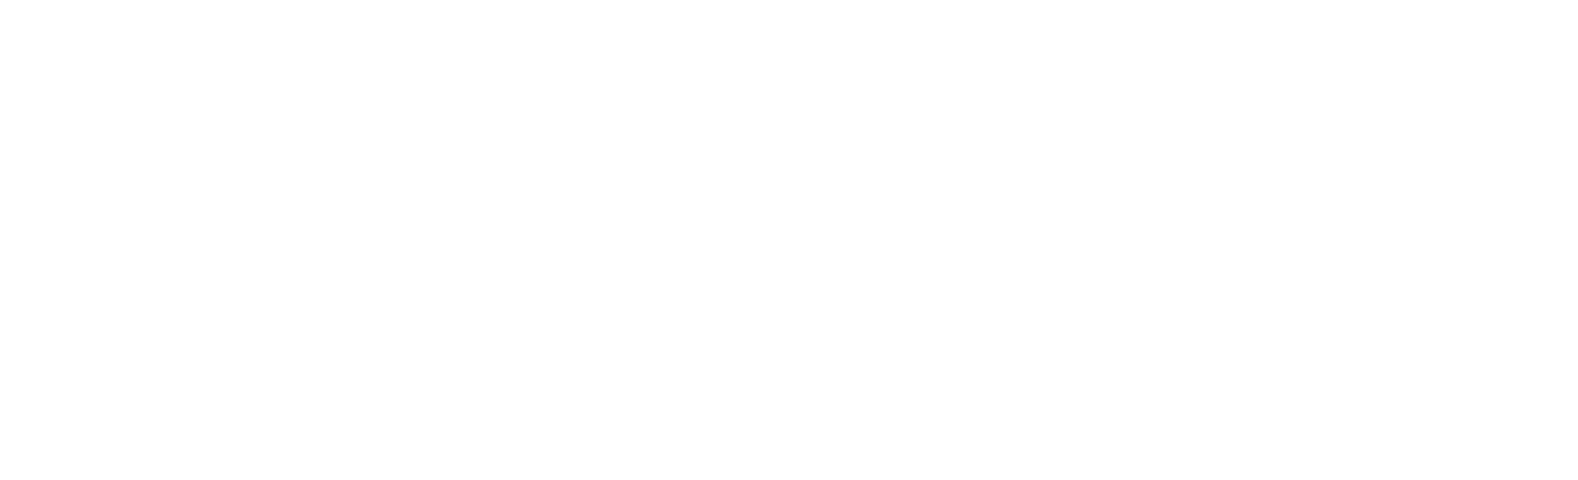 GEA Group
 logo for dark backgrounds (transparent PNG)